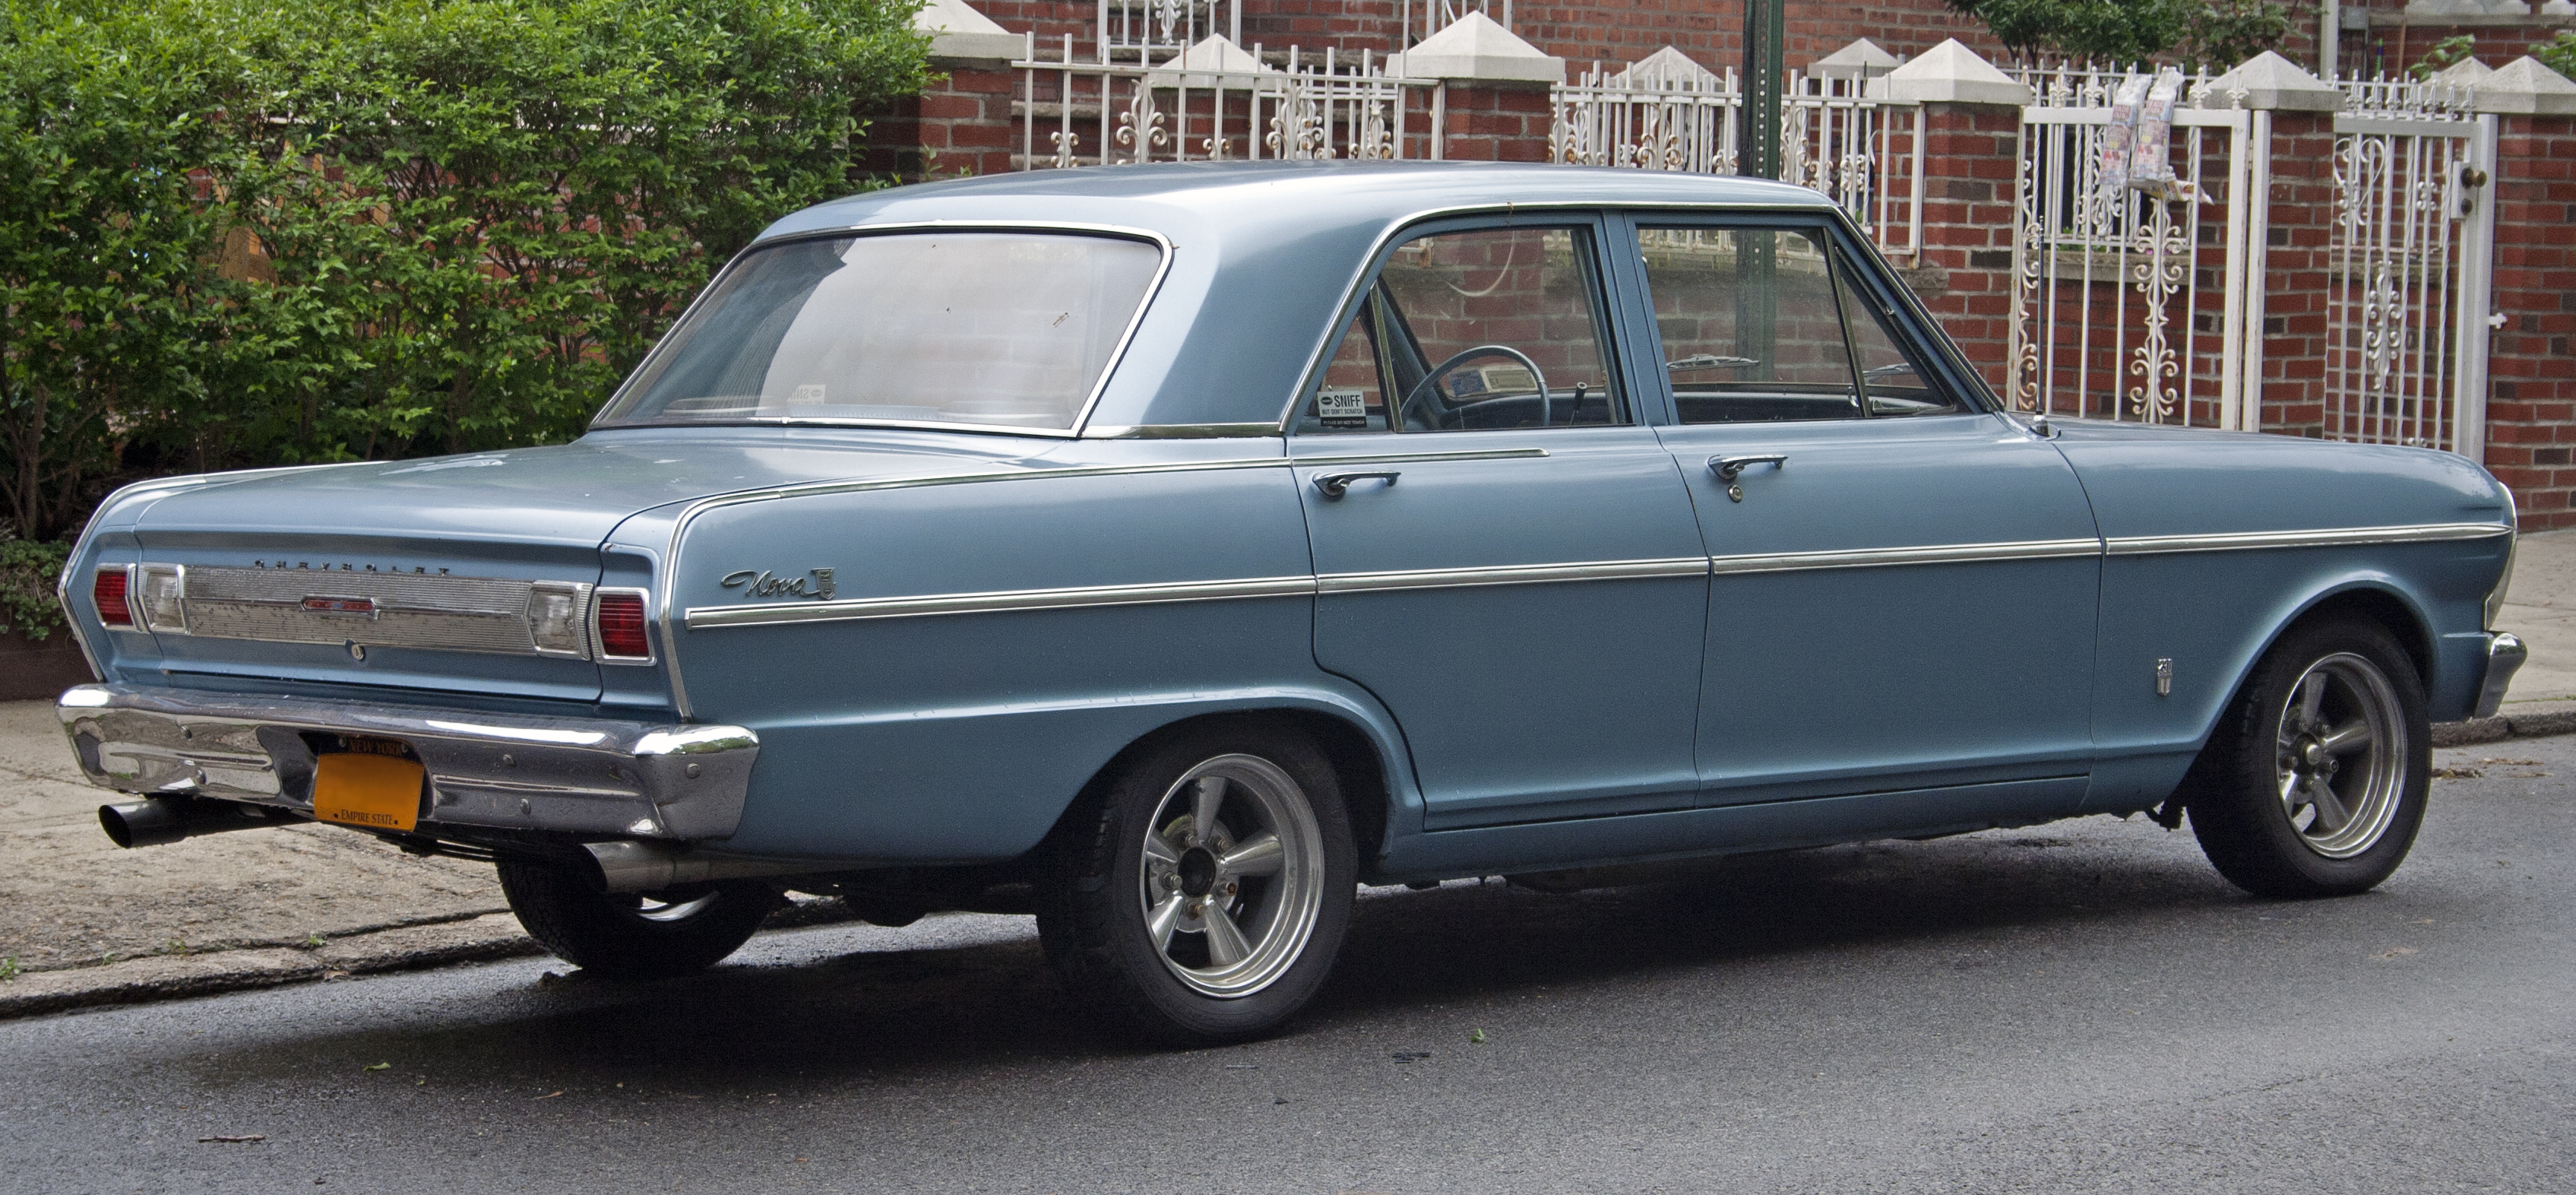 Download Latest HD Wallpaper of, Vehicles, 1965 Chevrolet Nova